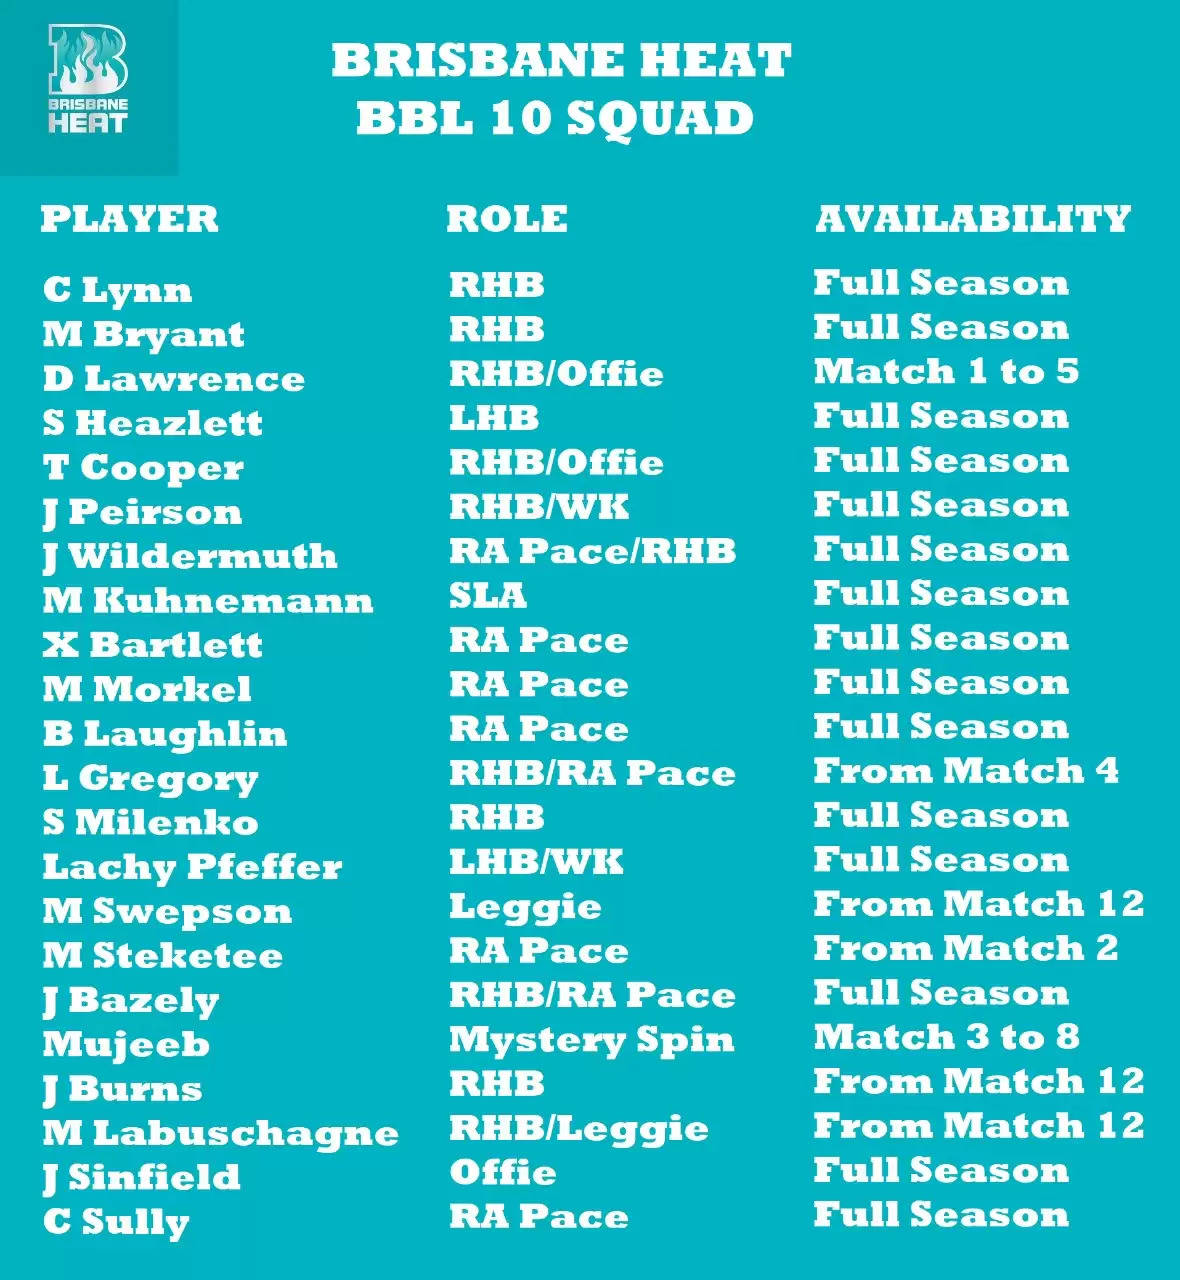 BBL 10: Brisbane Heat Team Preview, Squad And Fantasy Cheat Sheet For Big Bash League 2020-21 Season